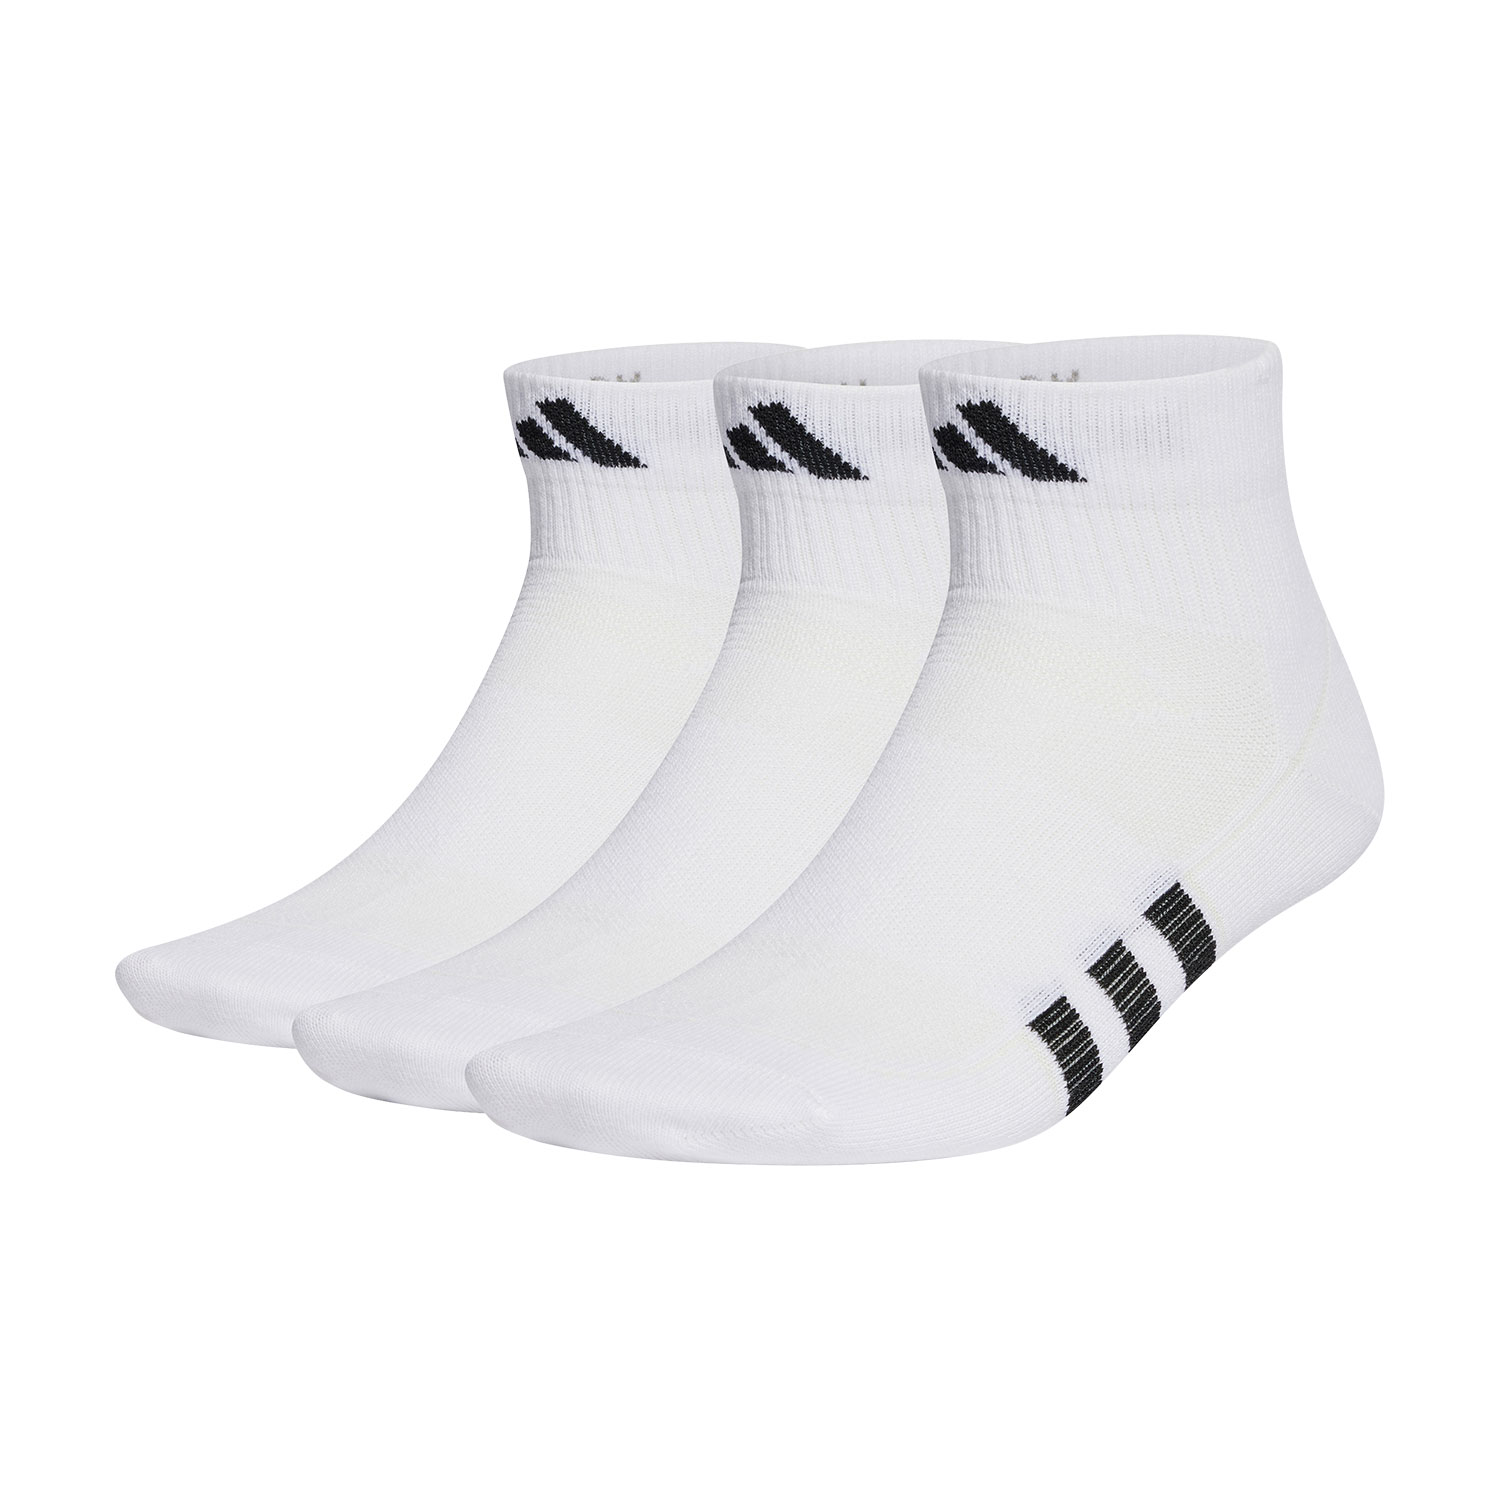 adidas Performance Light x 3 Socks - White